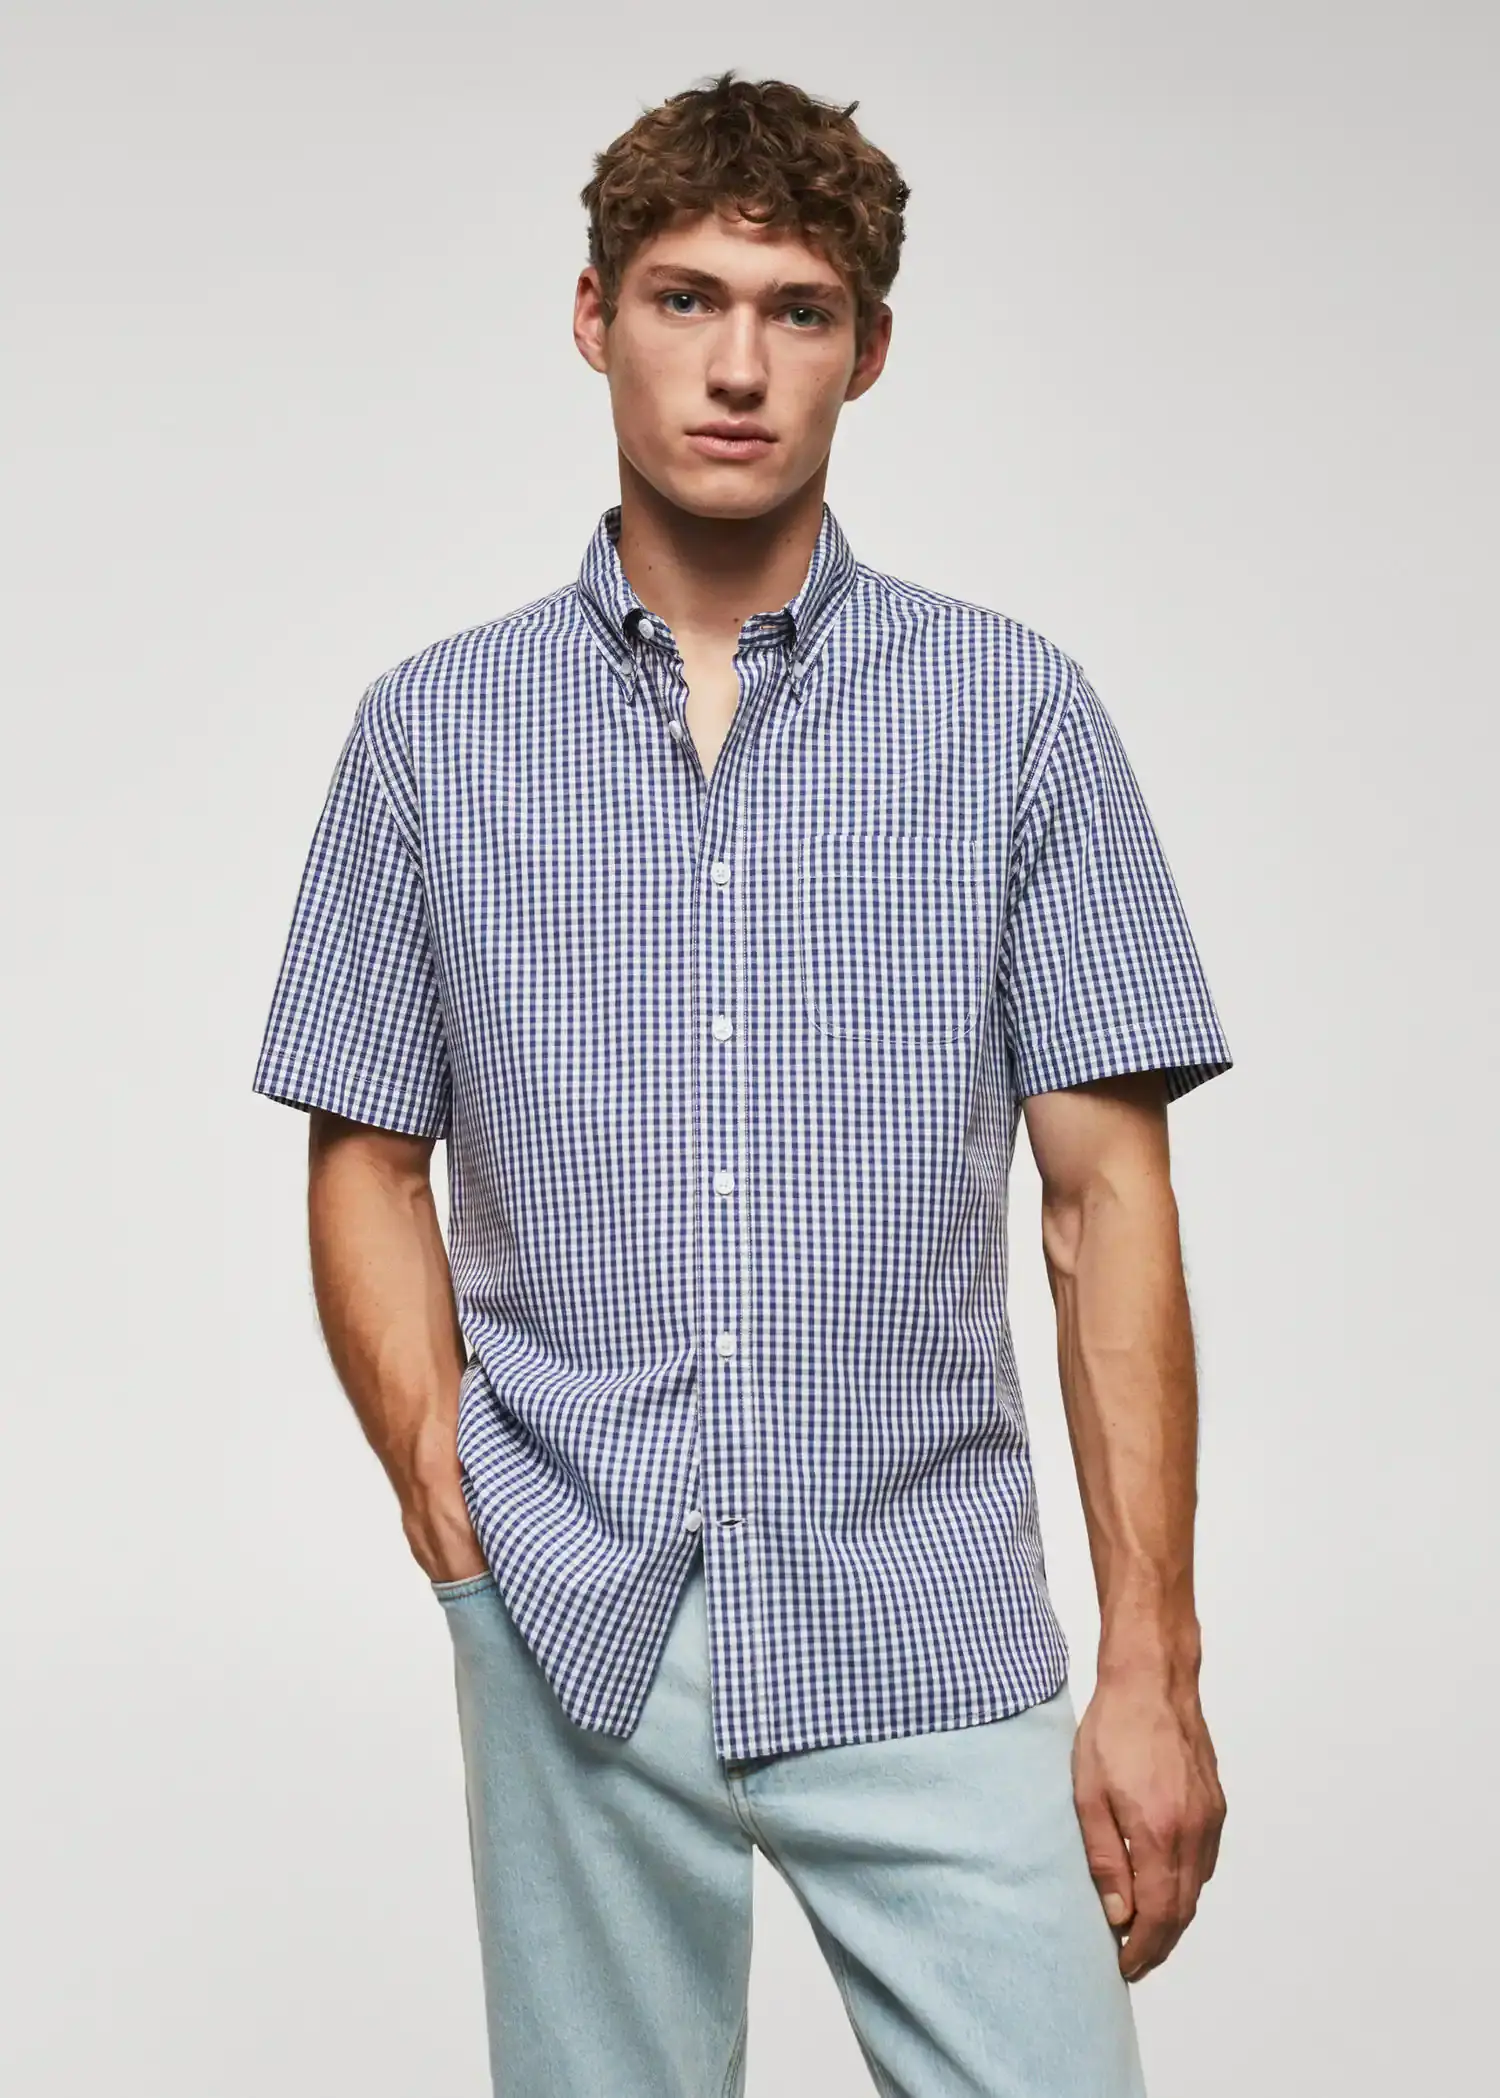 Mango 100% cotton short-sleeved printed shirt. 1